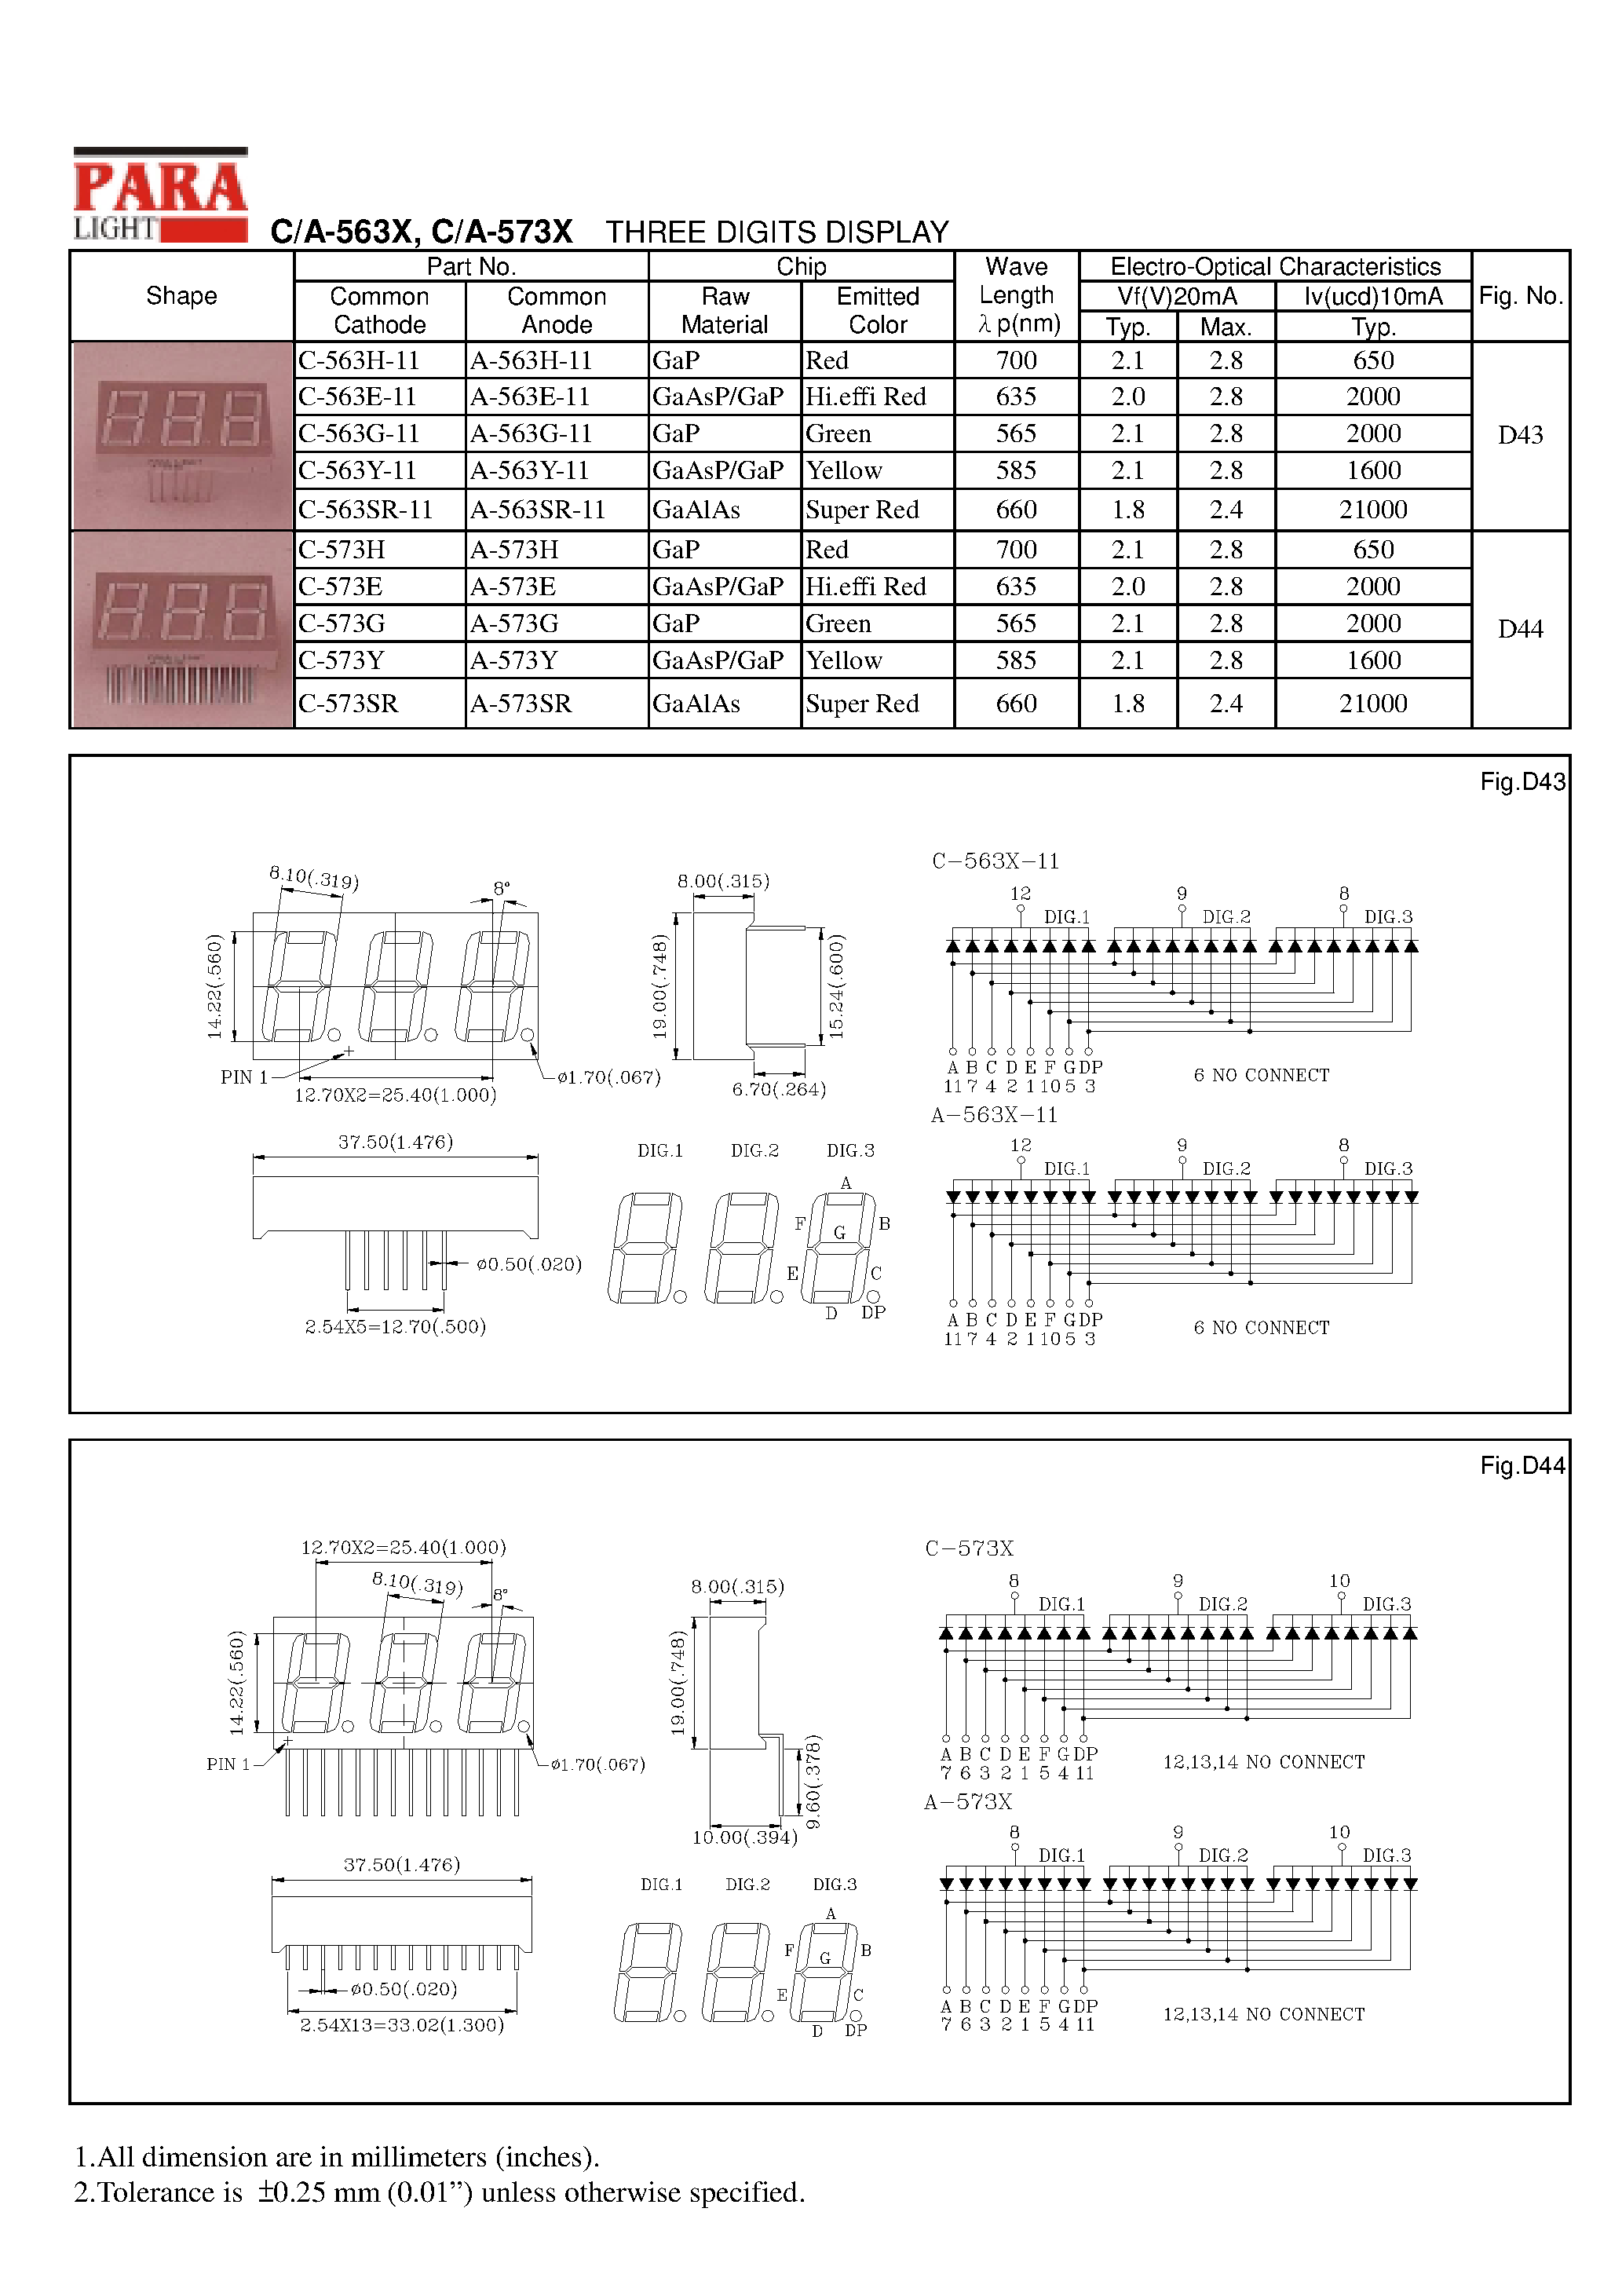 Datasheet A-573E - THREE DIGITS DISPLAY page 1